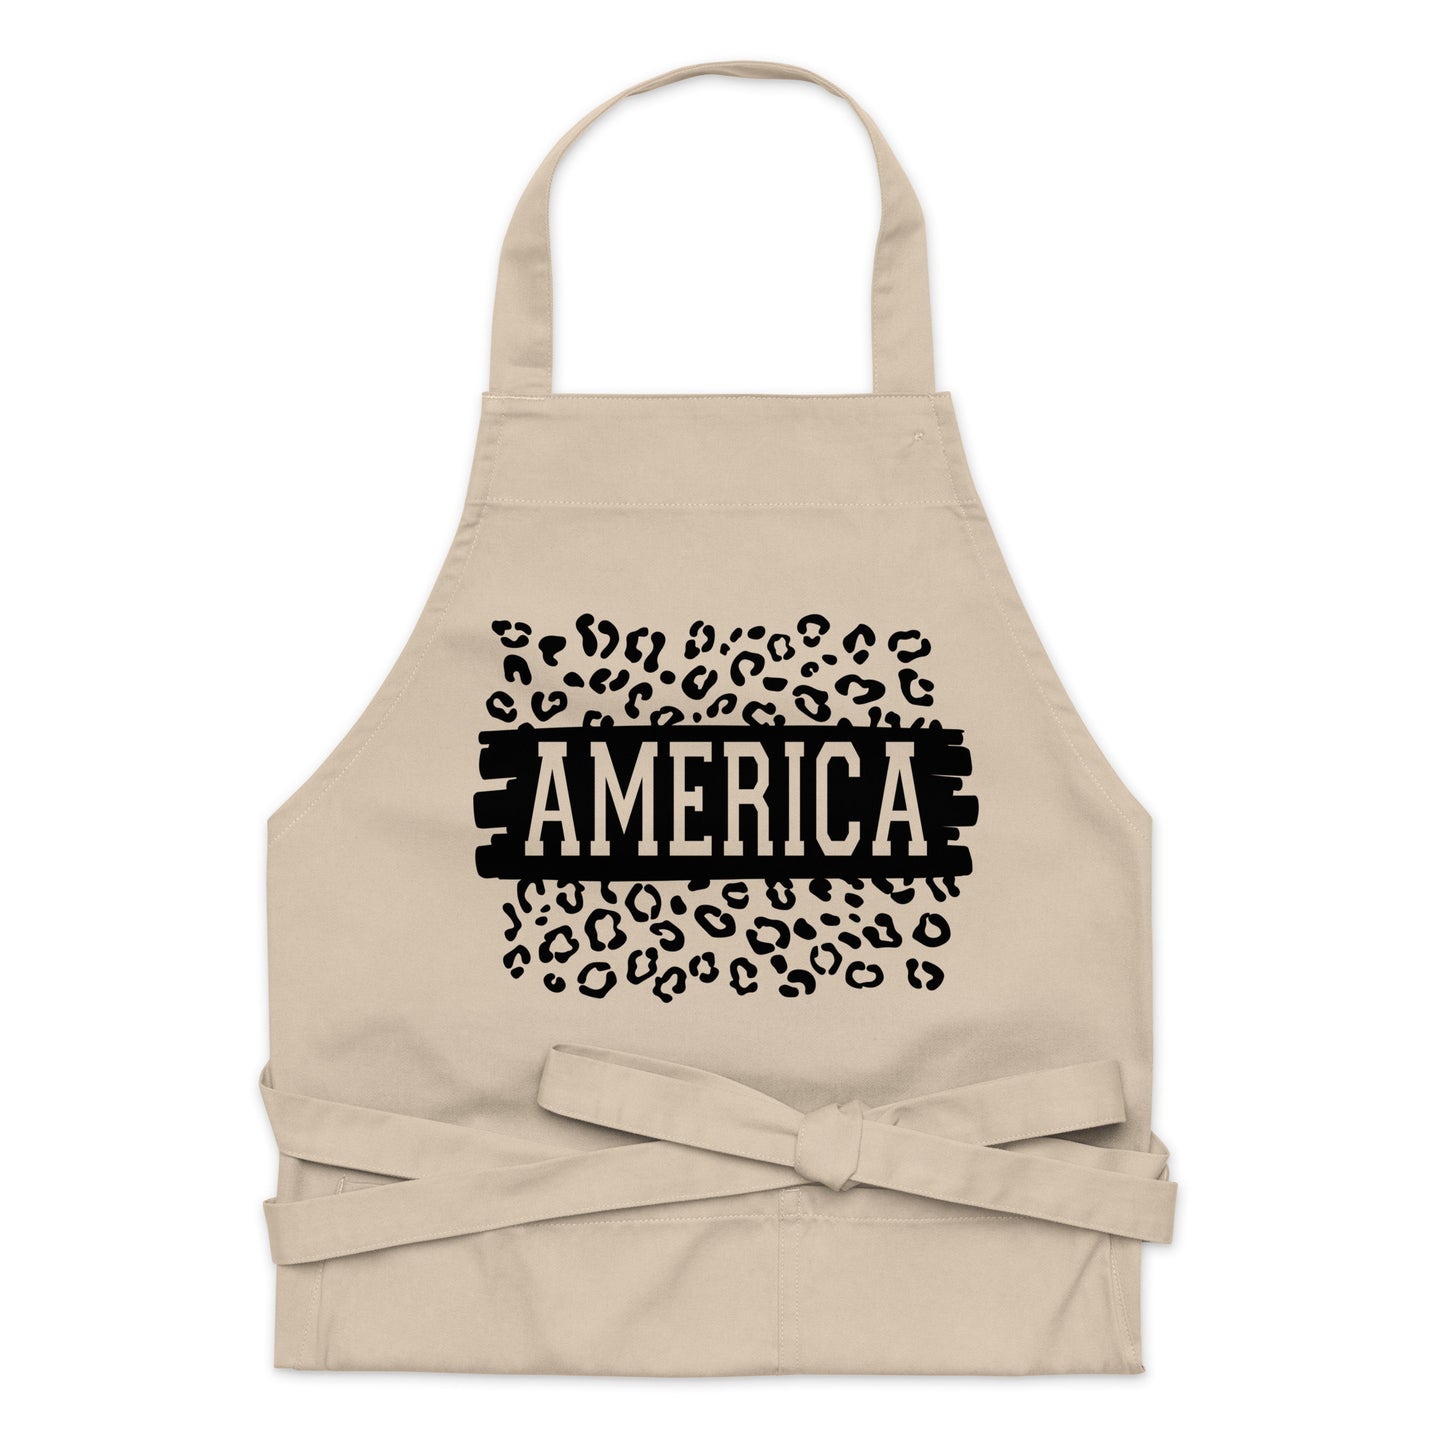 America Organic cotton apron